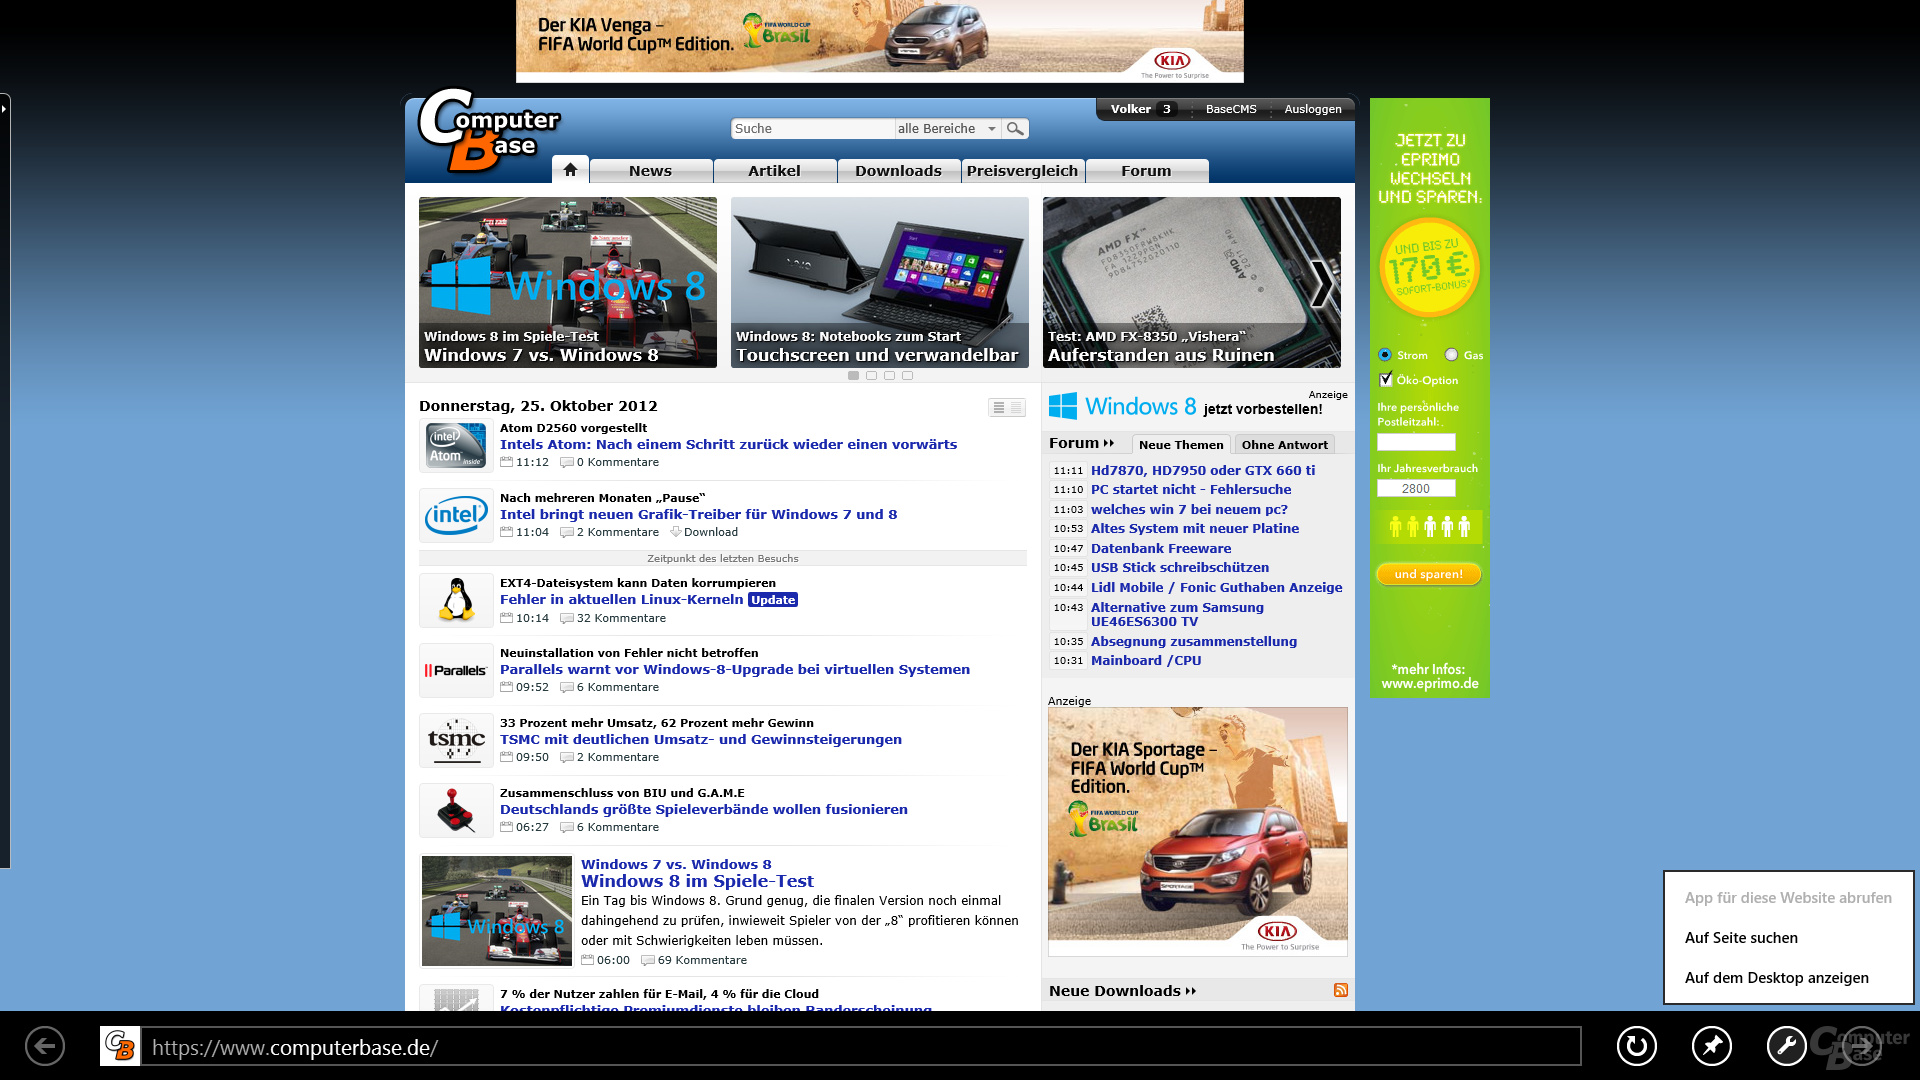 Internet Explorer 10 unter Modern UI